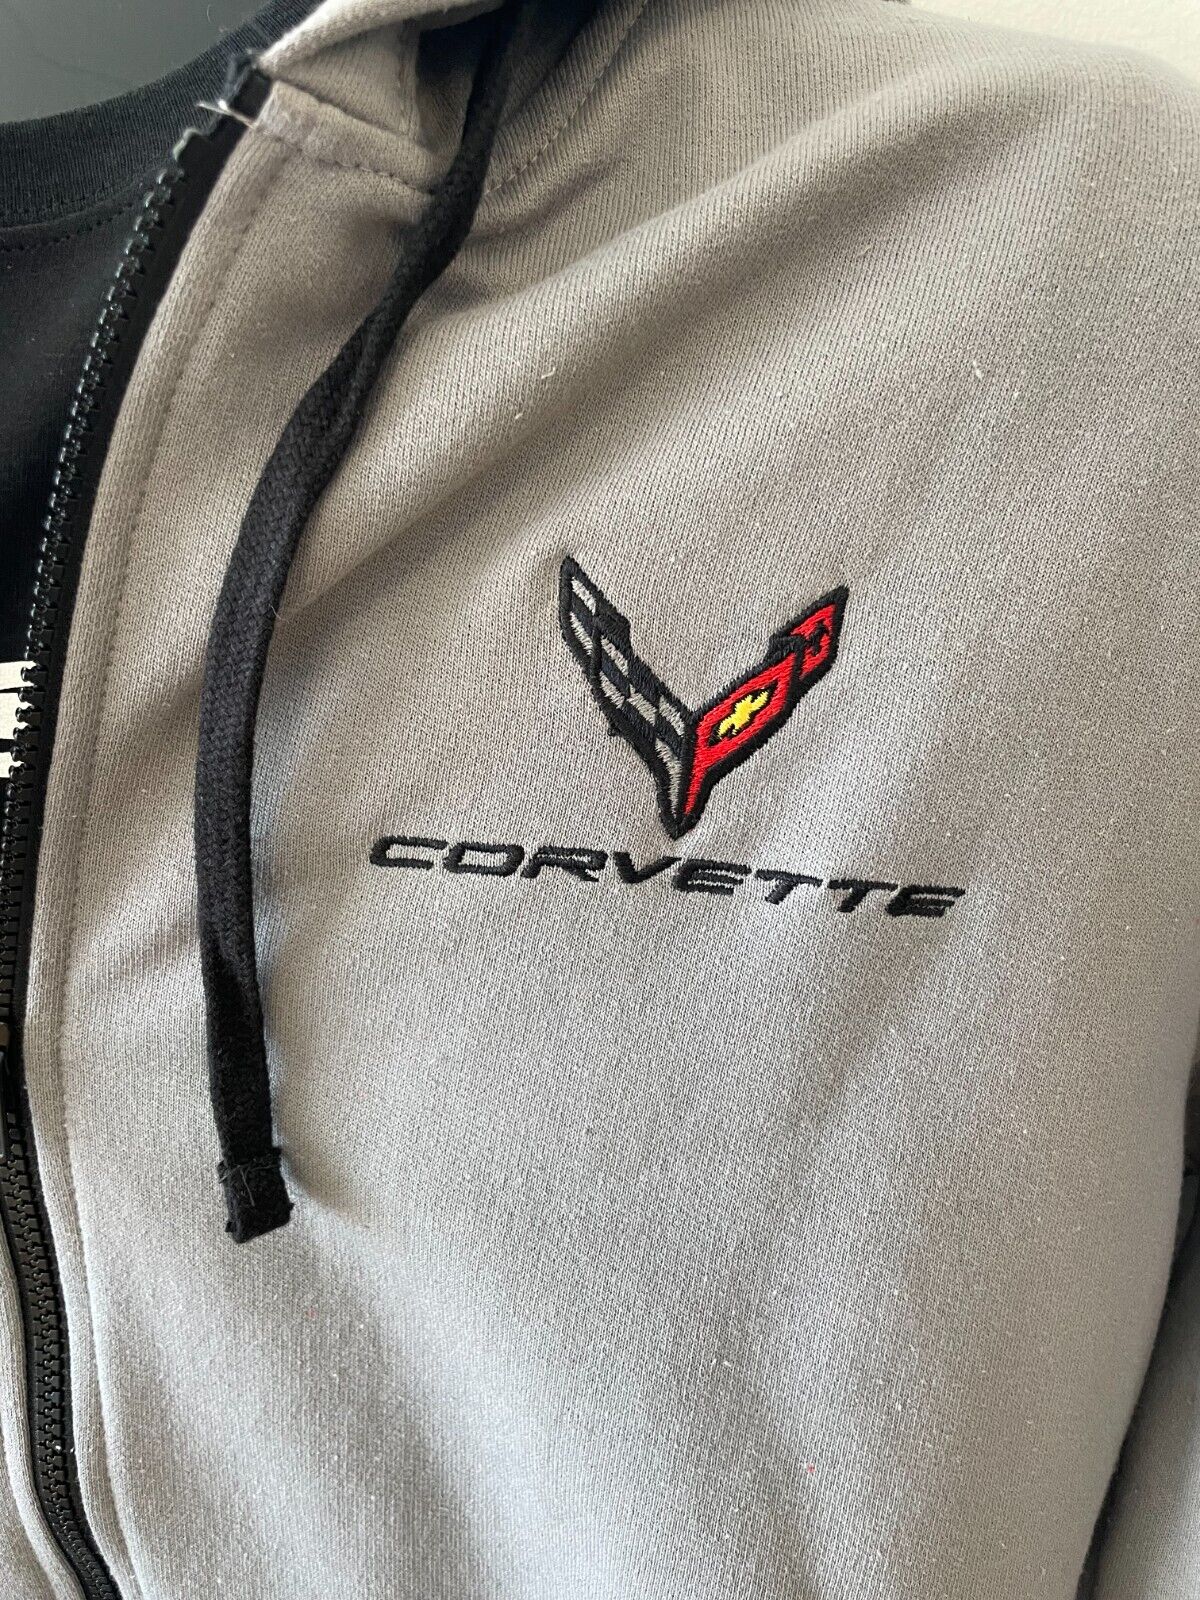 C8 Corvette Full Zip Hooded Sweatshirt Gray with Black Accents Long Sleeve